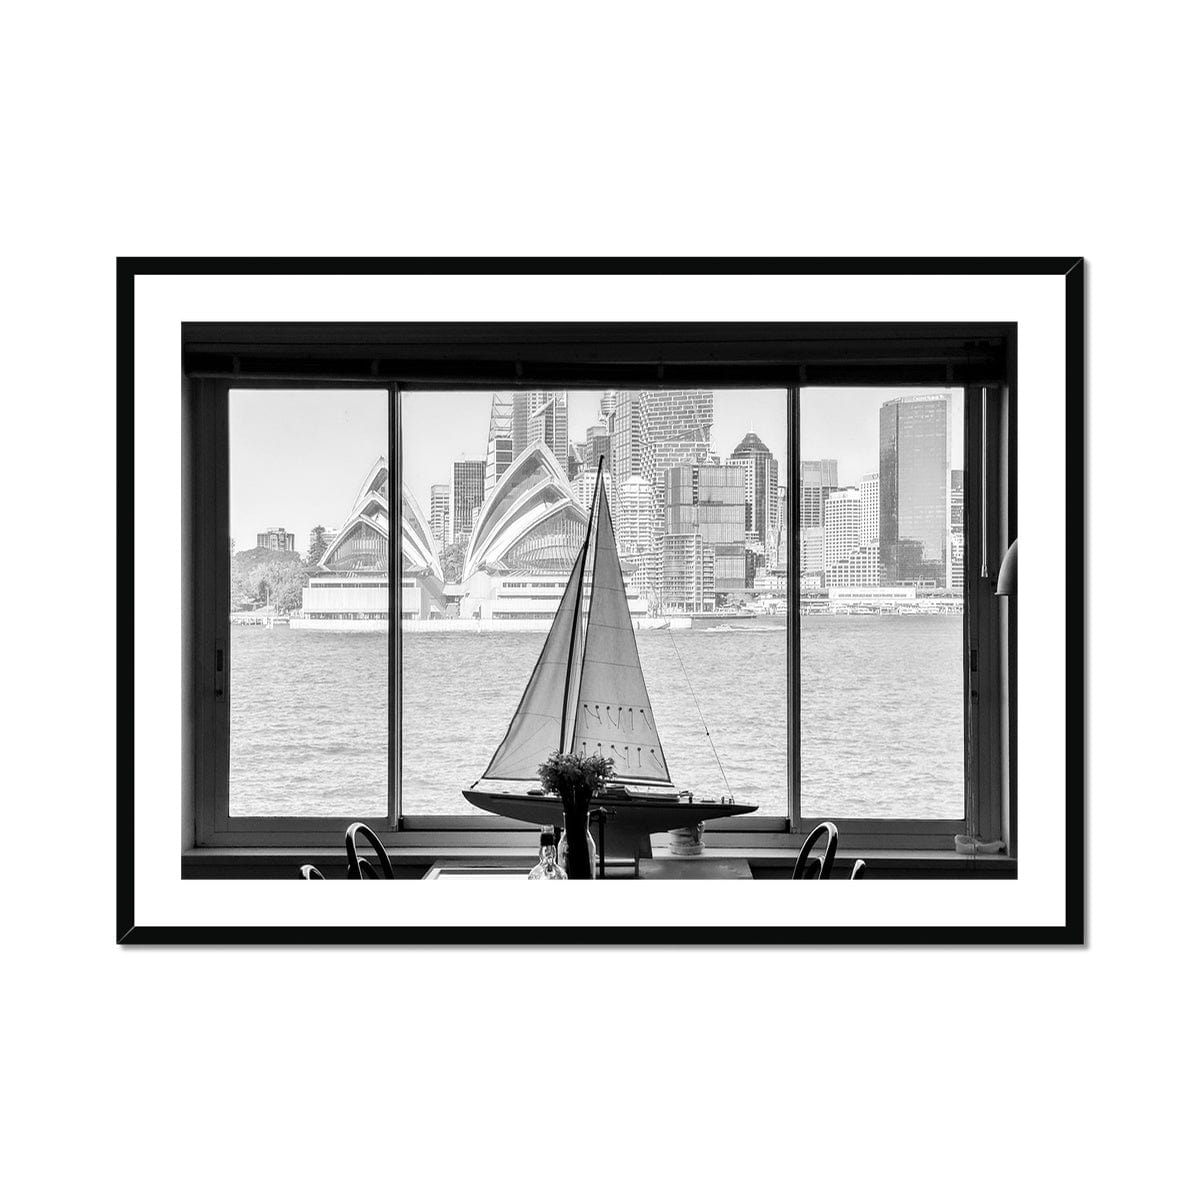 Seek & Ramble Framed 40"x28" / Black Frame Boat View Framed & Mounted Print